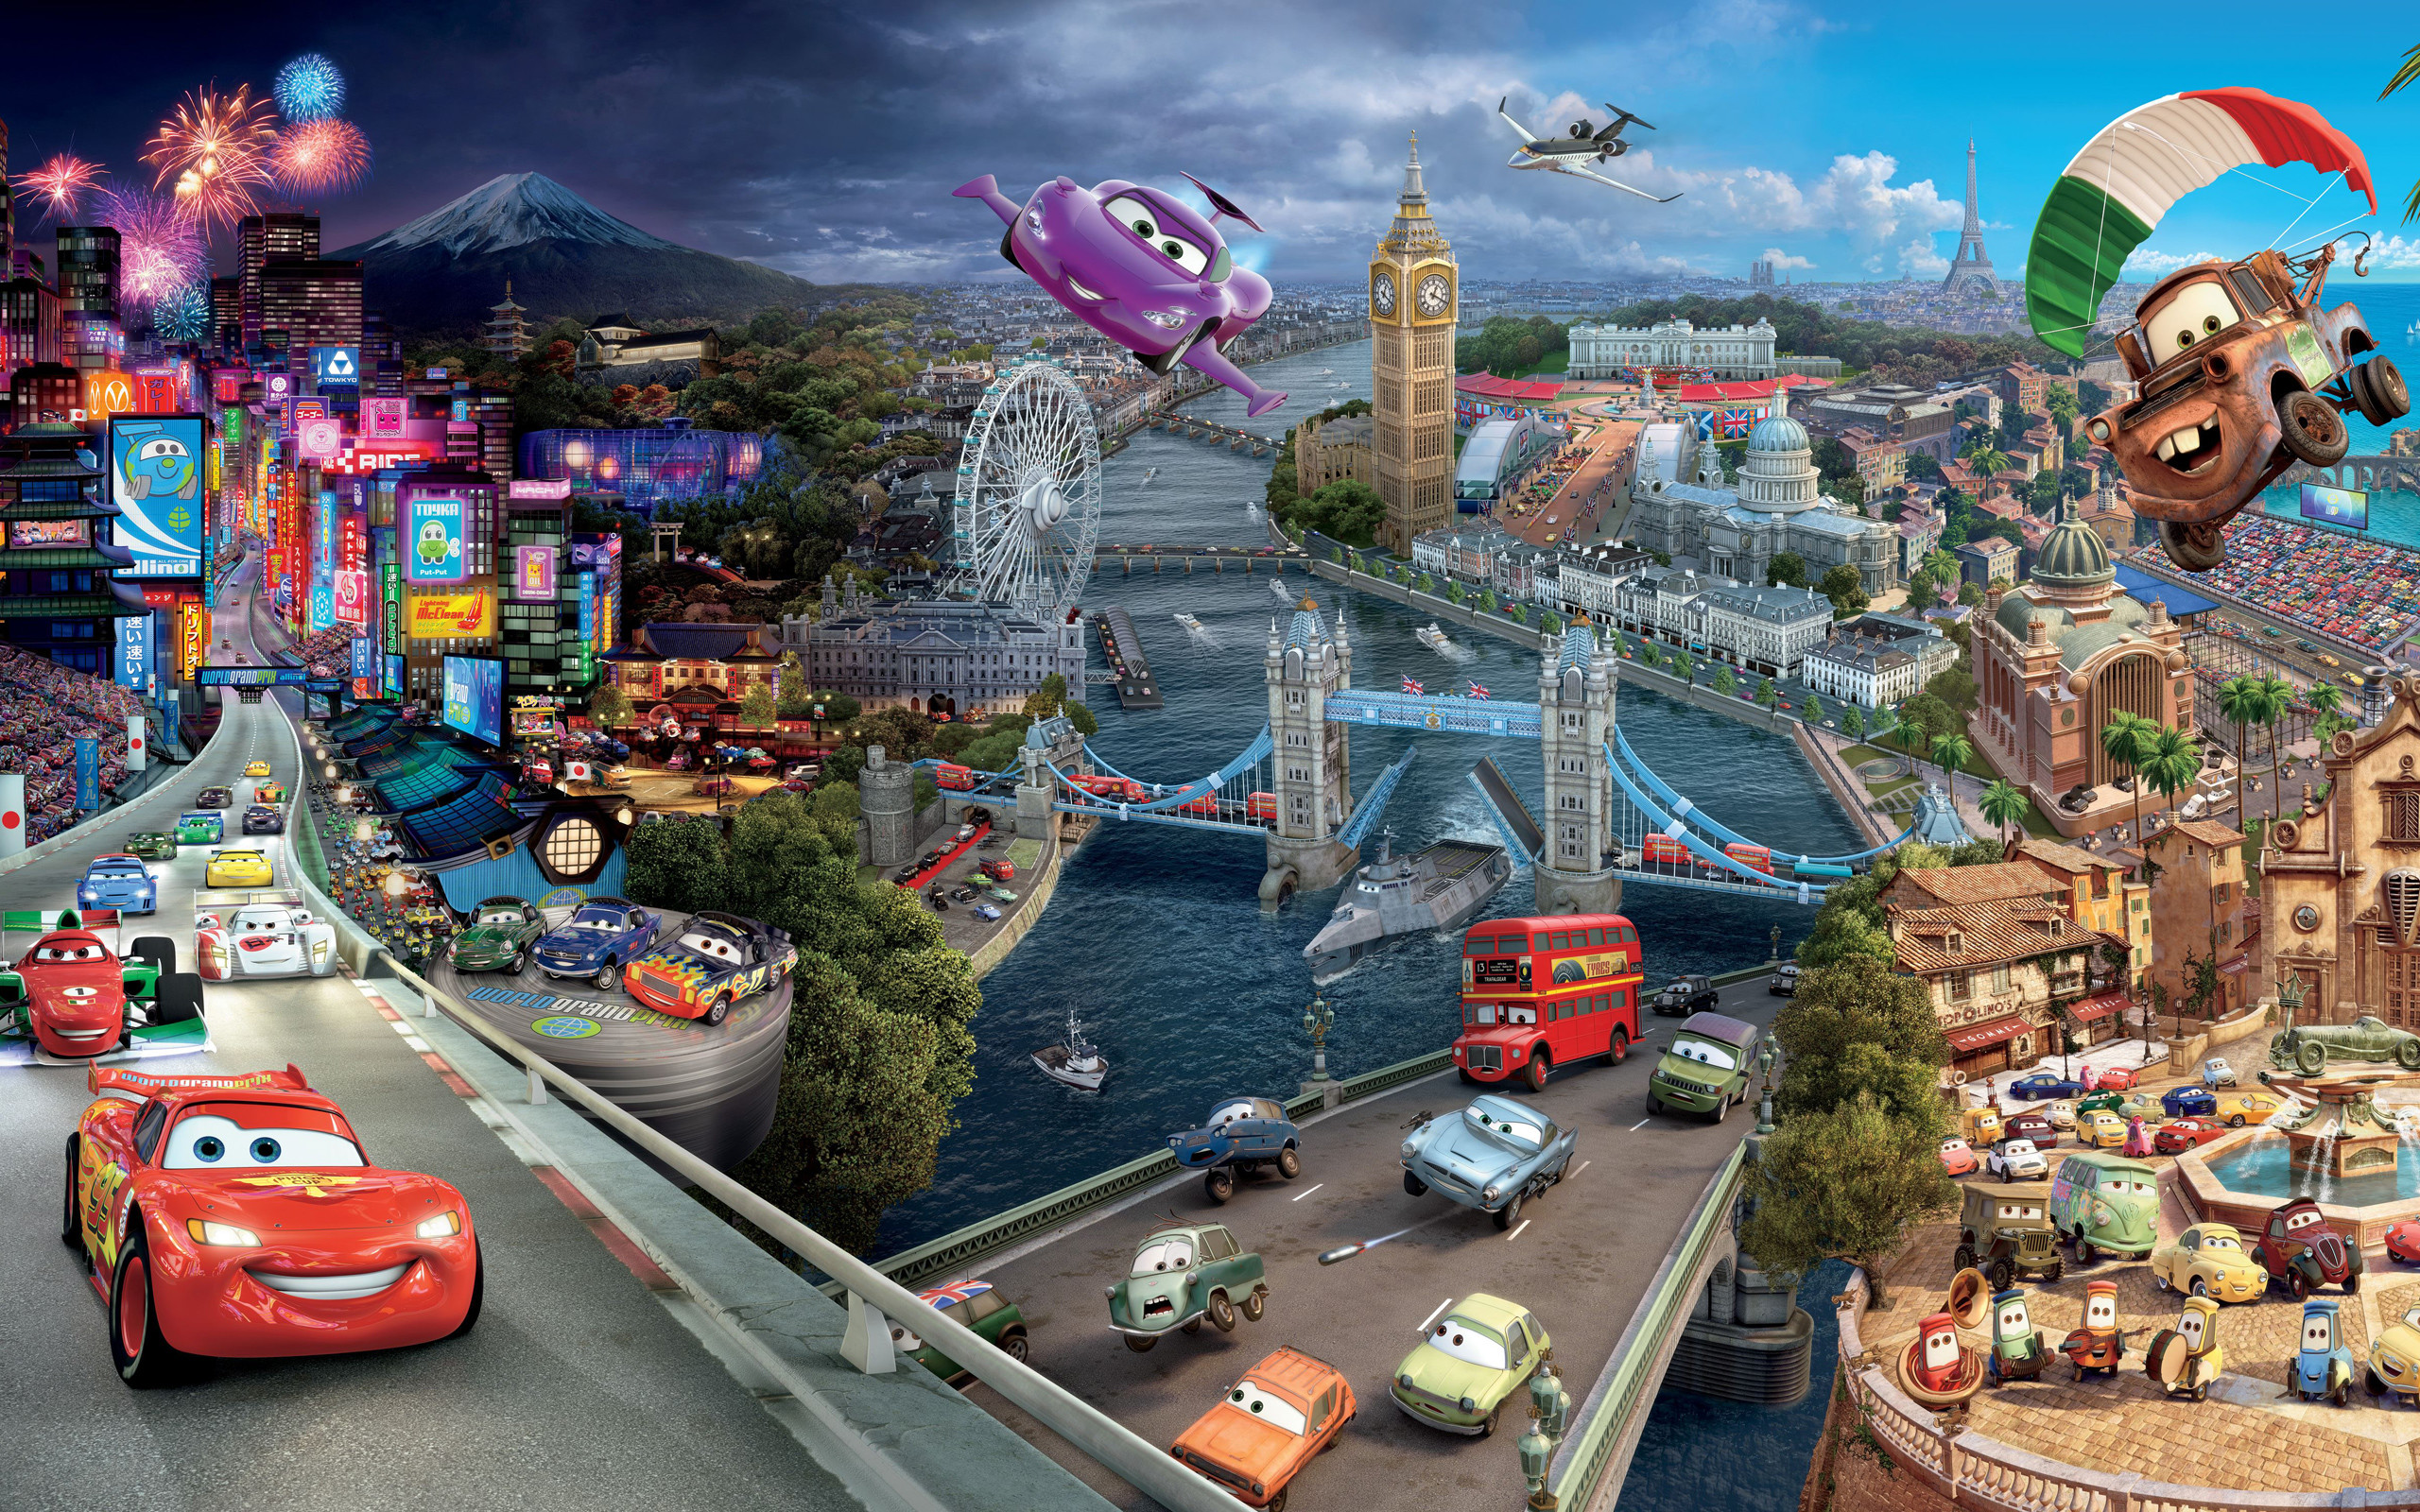 2560x1600 Disney Pixar Cars images Disney Cars wallpaper HD wallpaper and Source Â·  Cars 2 High Resolution Wallpapers Hd Wallpapers